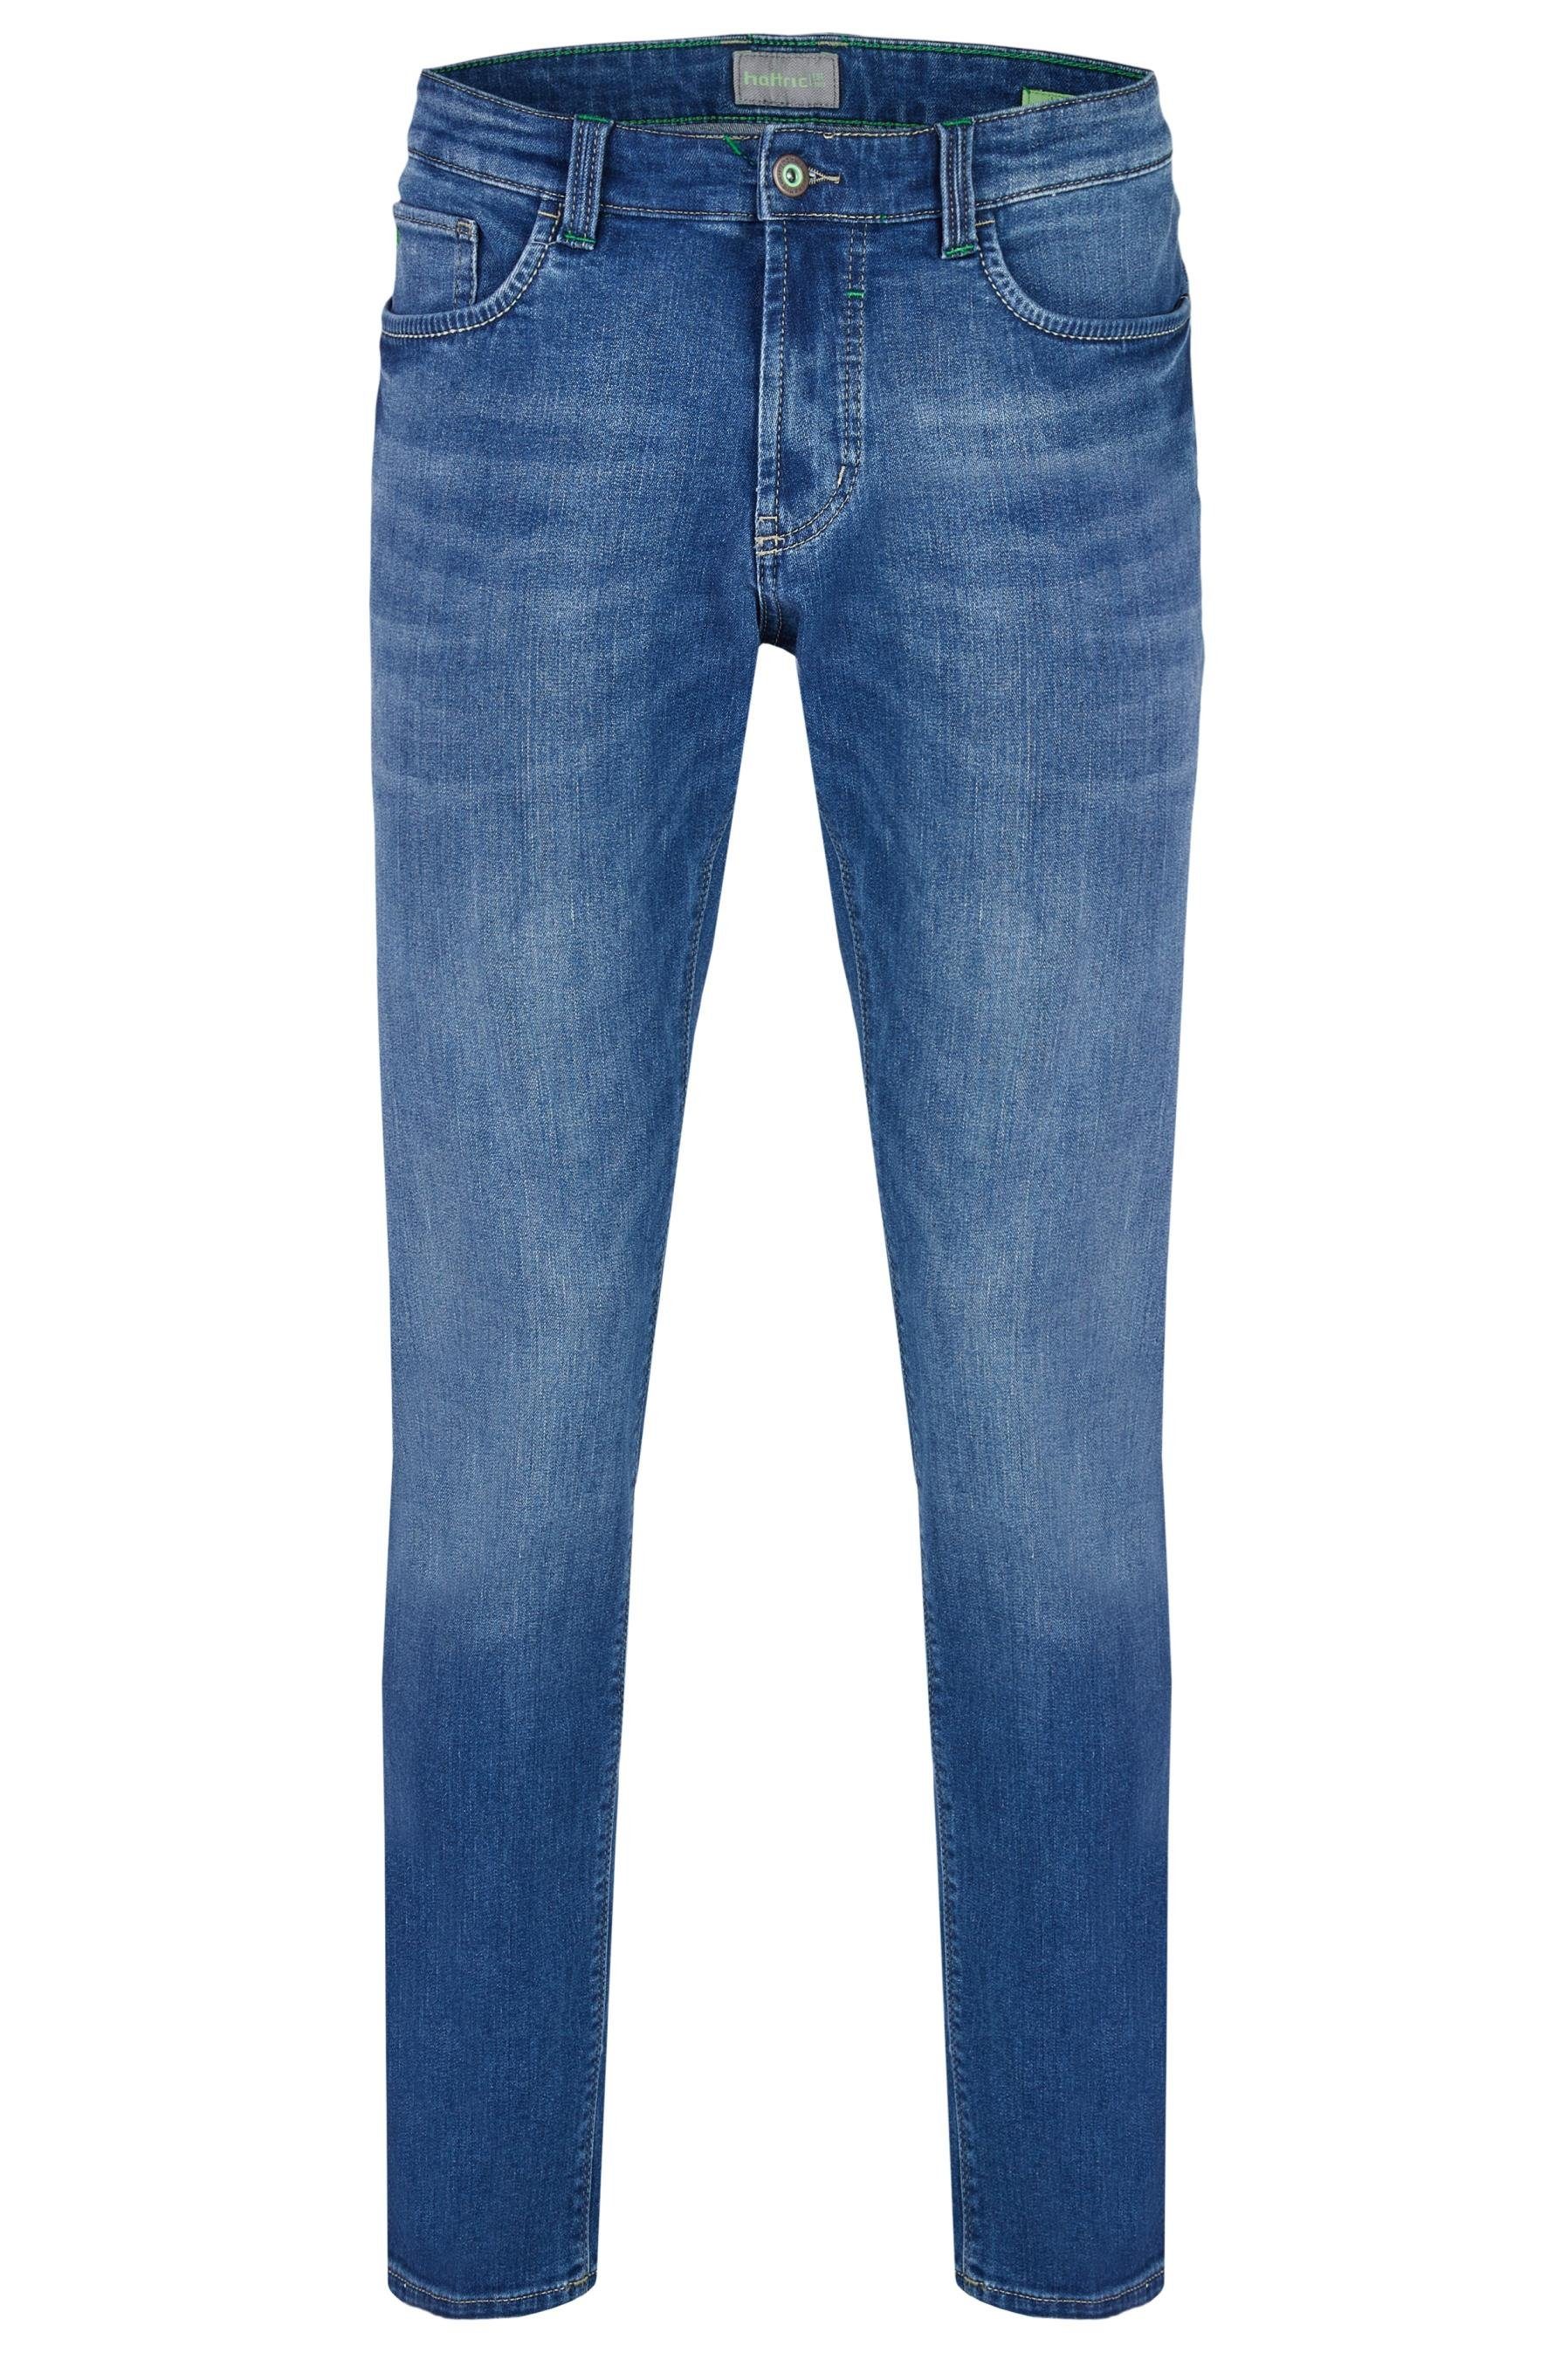 Hattric 5-Pocket-Jeans HATTRIC HARRIS mid blue used 688125 9318.42